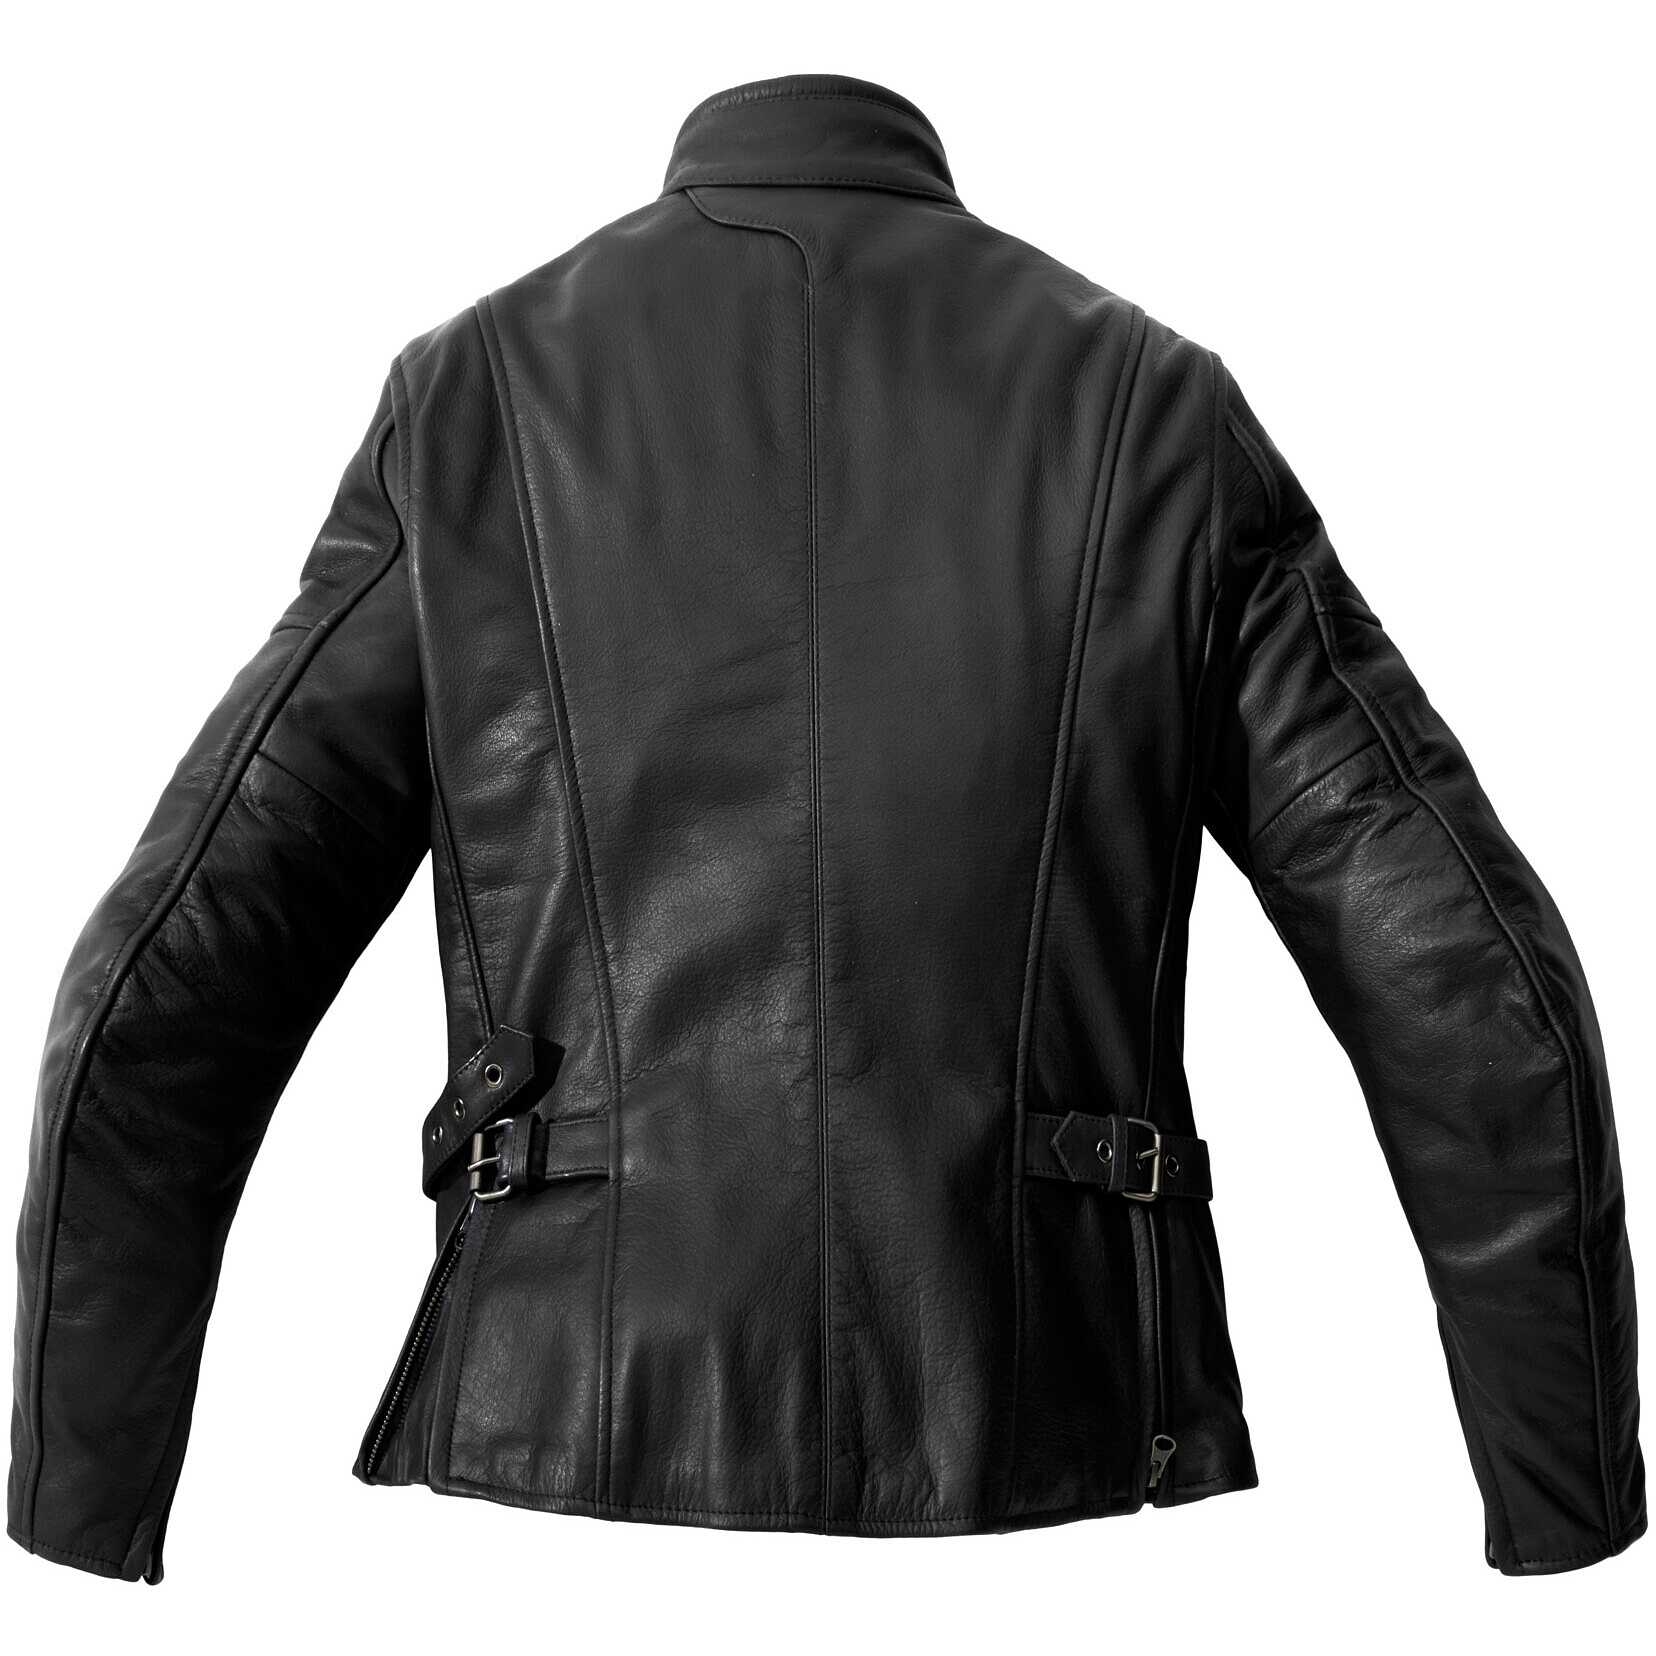 Spidi MACK LADY Black Leather Motorcycle Jacket For Sale Online ...